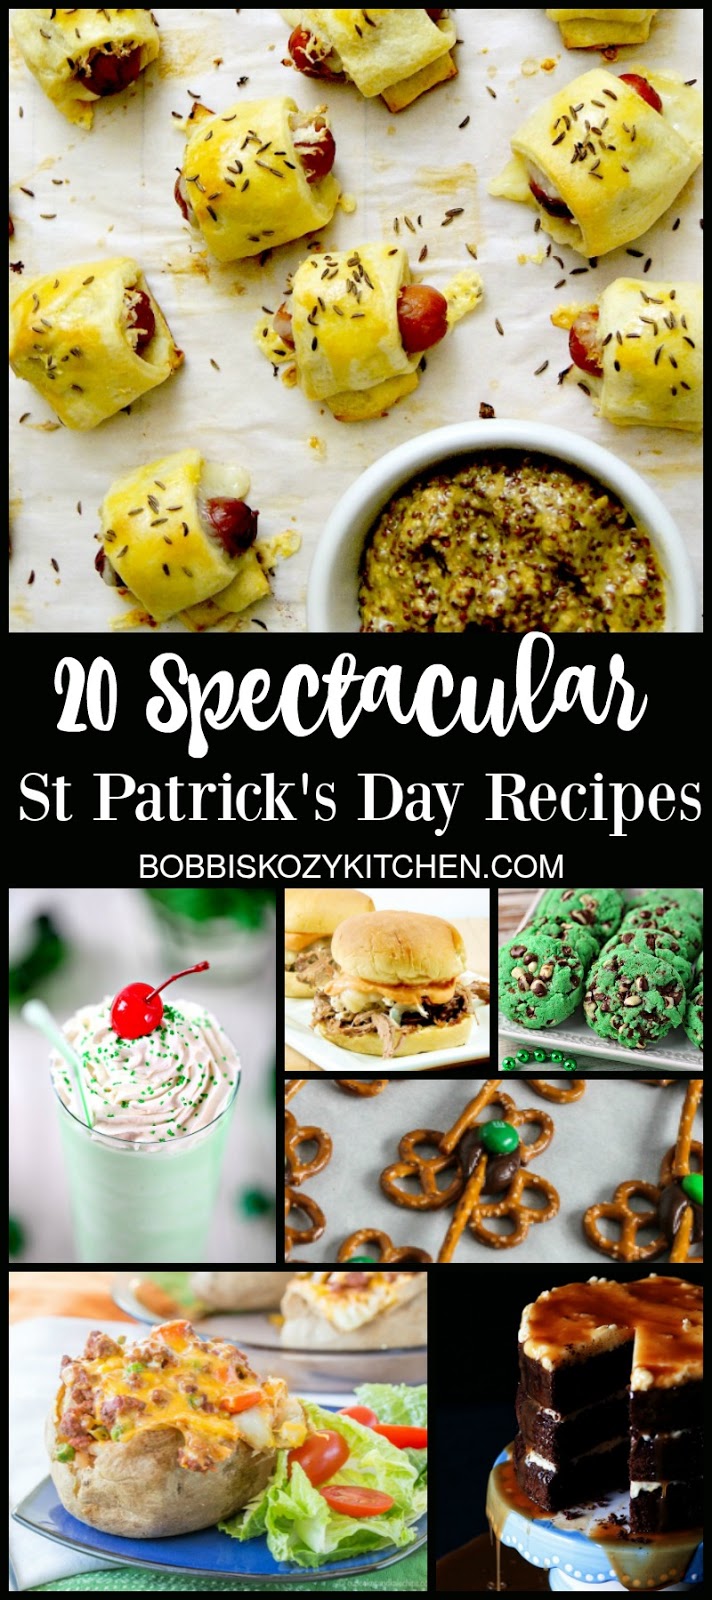 20 Spectacular St Patrick’s Day Recipes